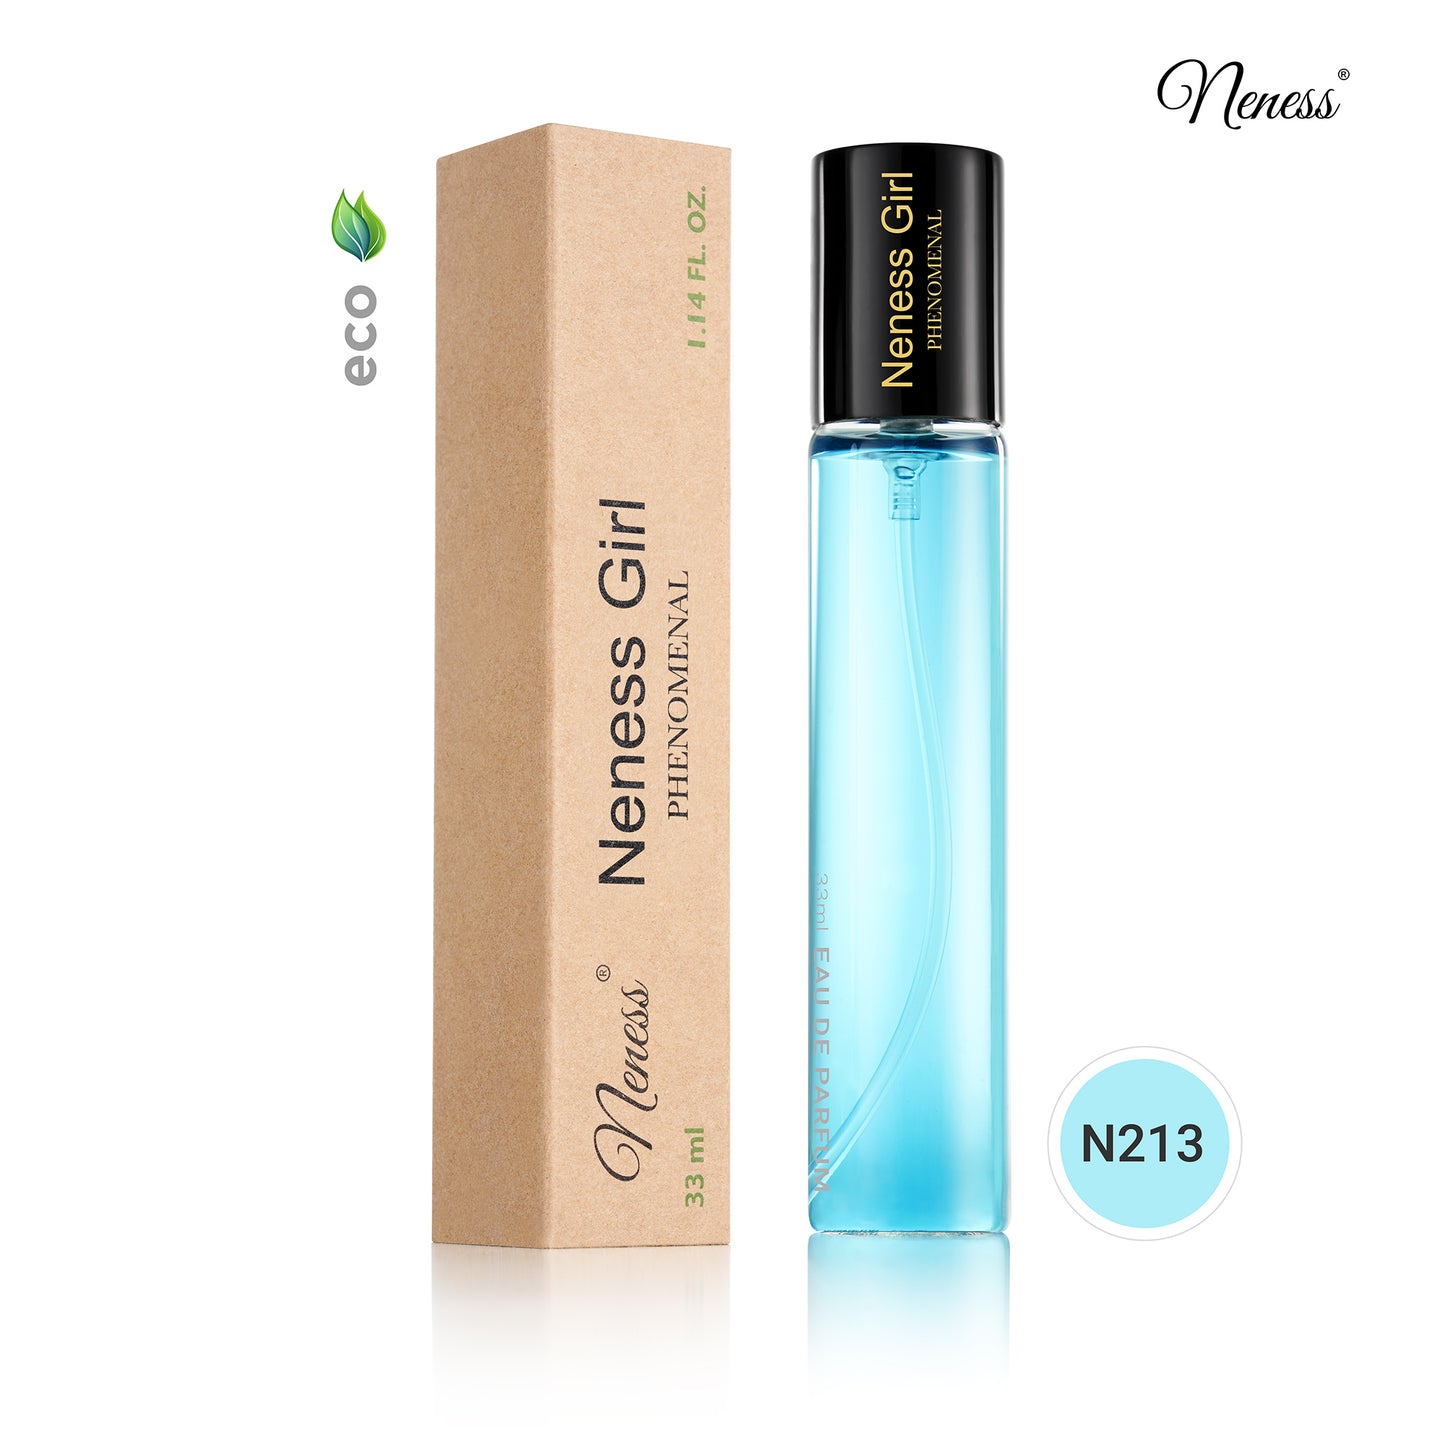 N213. Neness Girl Phenomenal - 33 ml - Perfume For Women